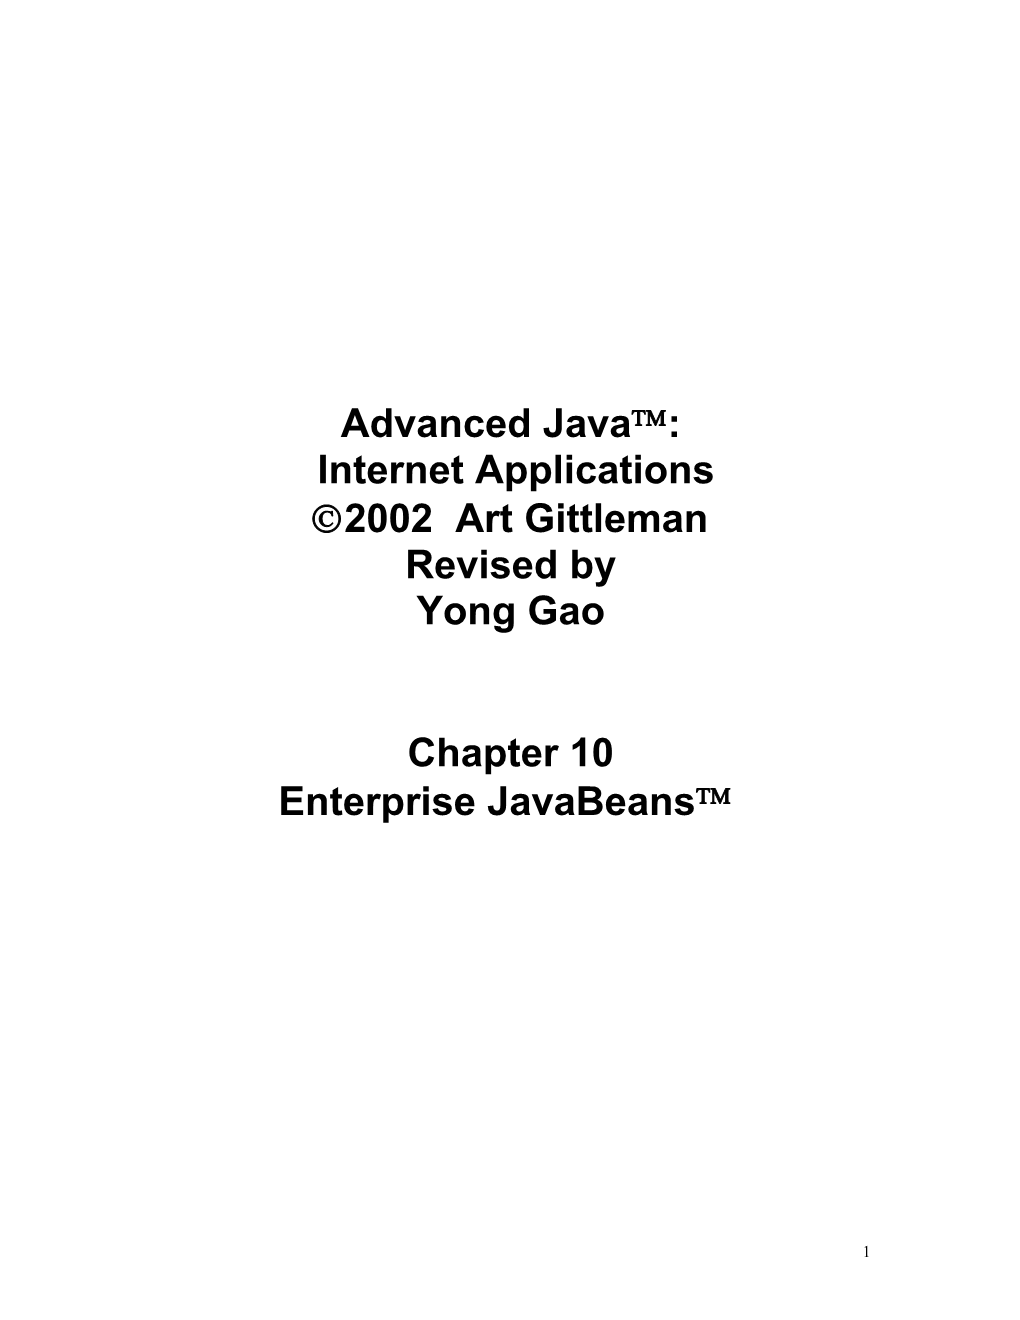 Java Internet Applications